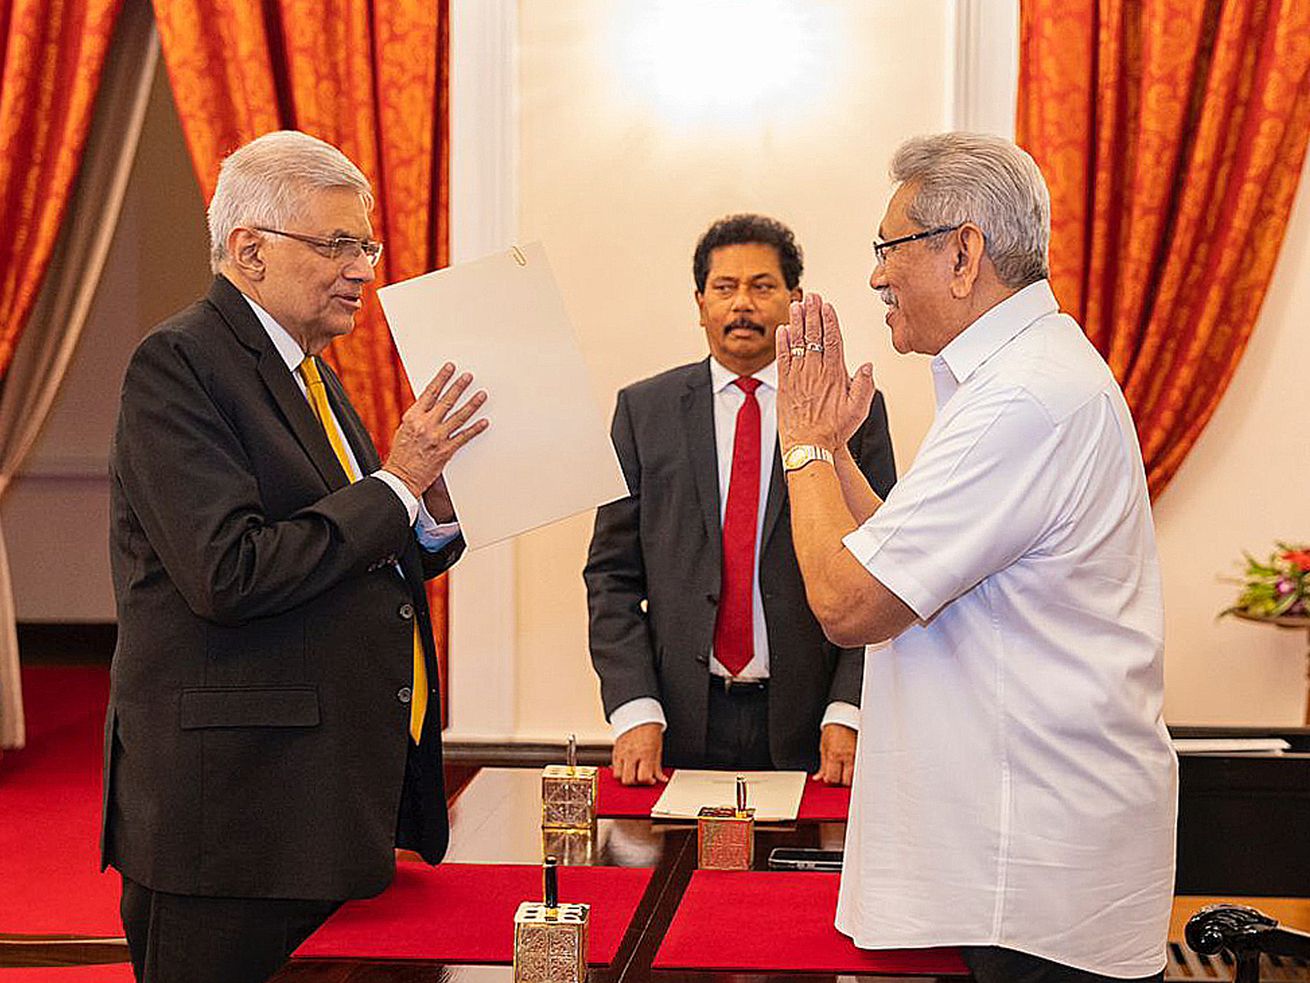 Sri Lanka appoints new prime minister amid turmoil